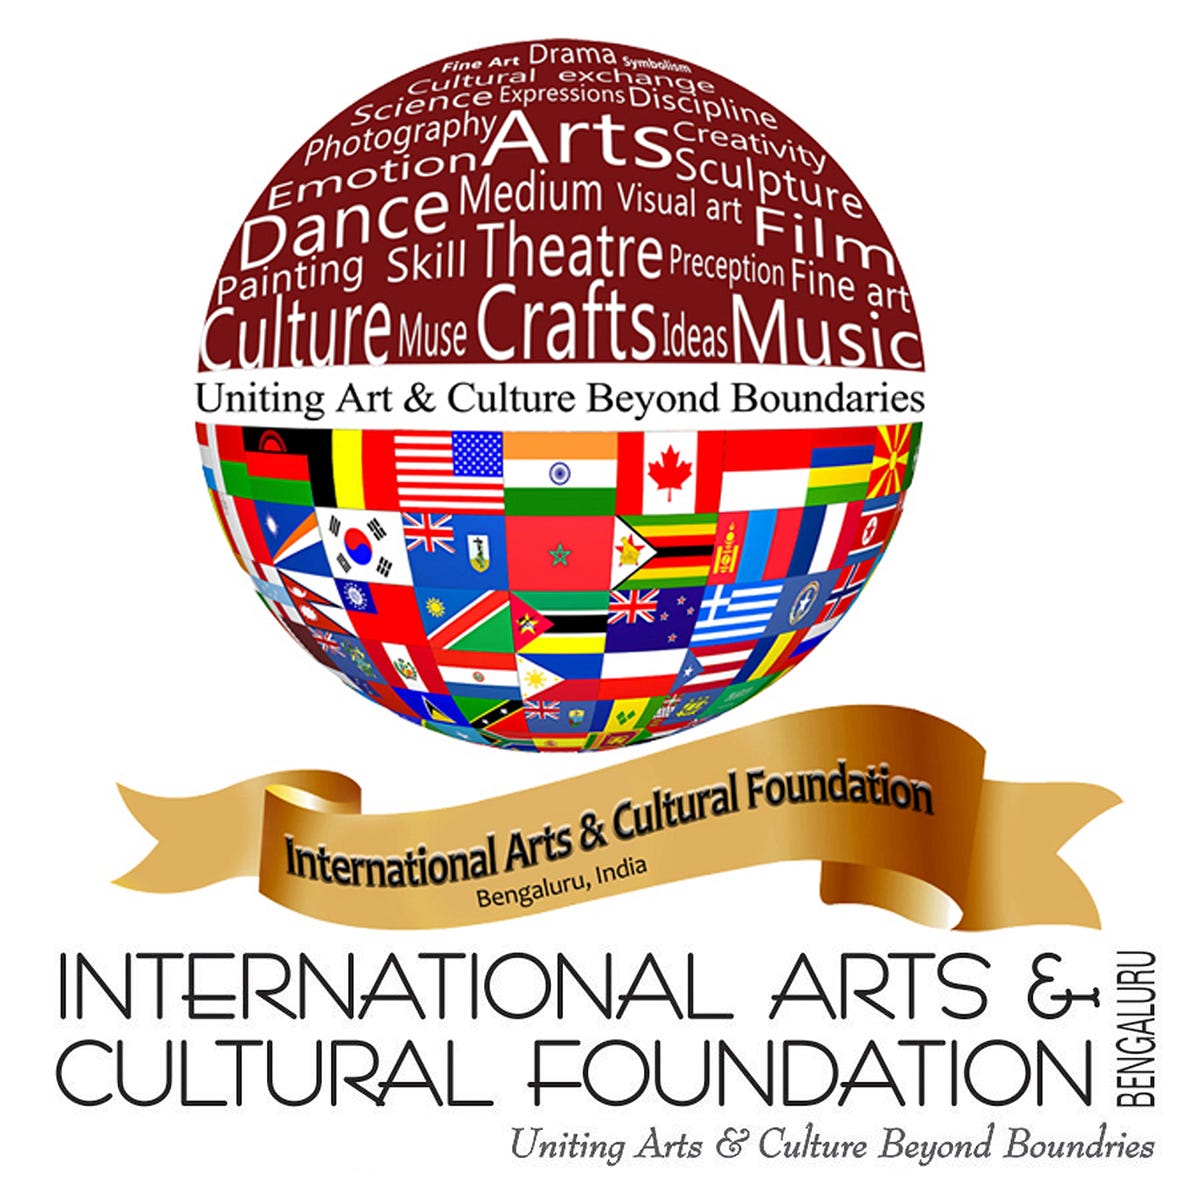 Calendar of Events of International Arts & Cultural Foundation 201718